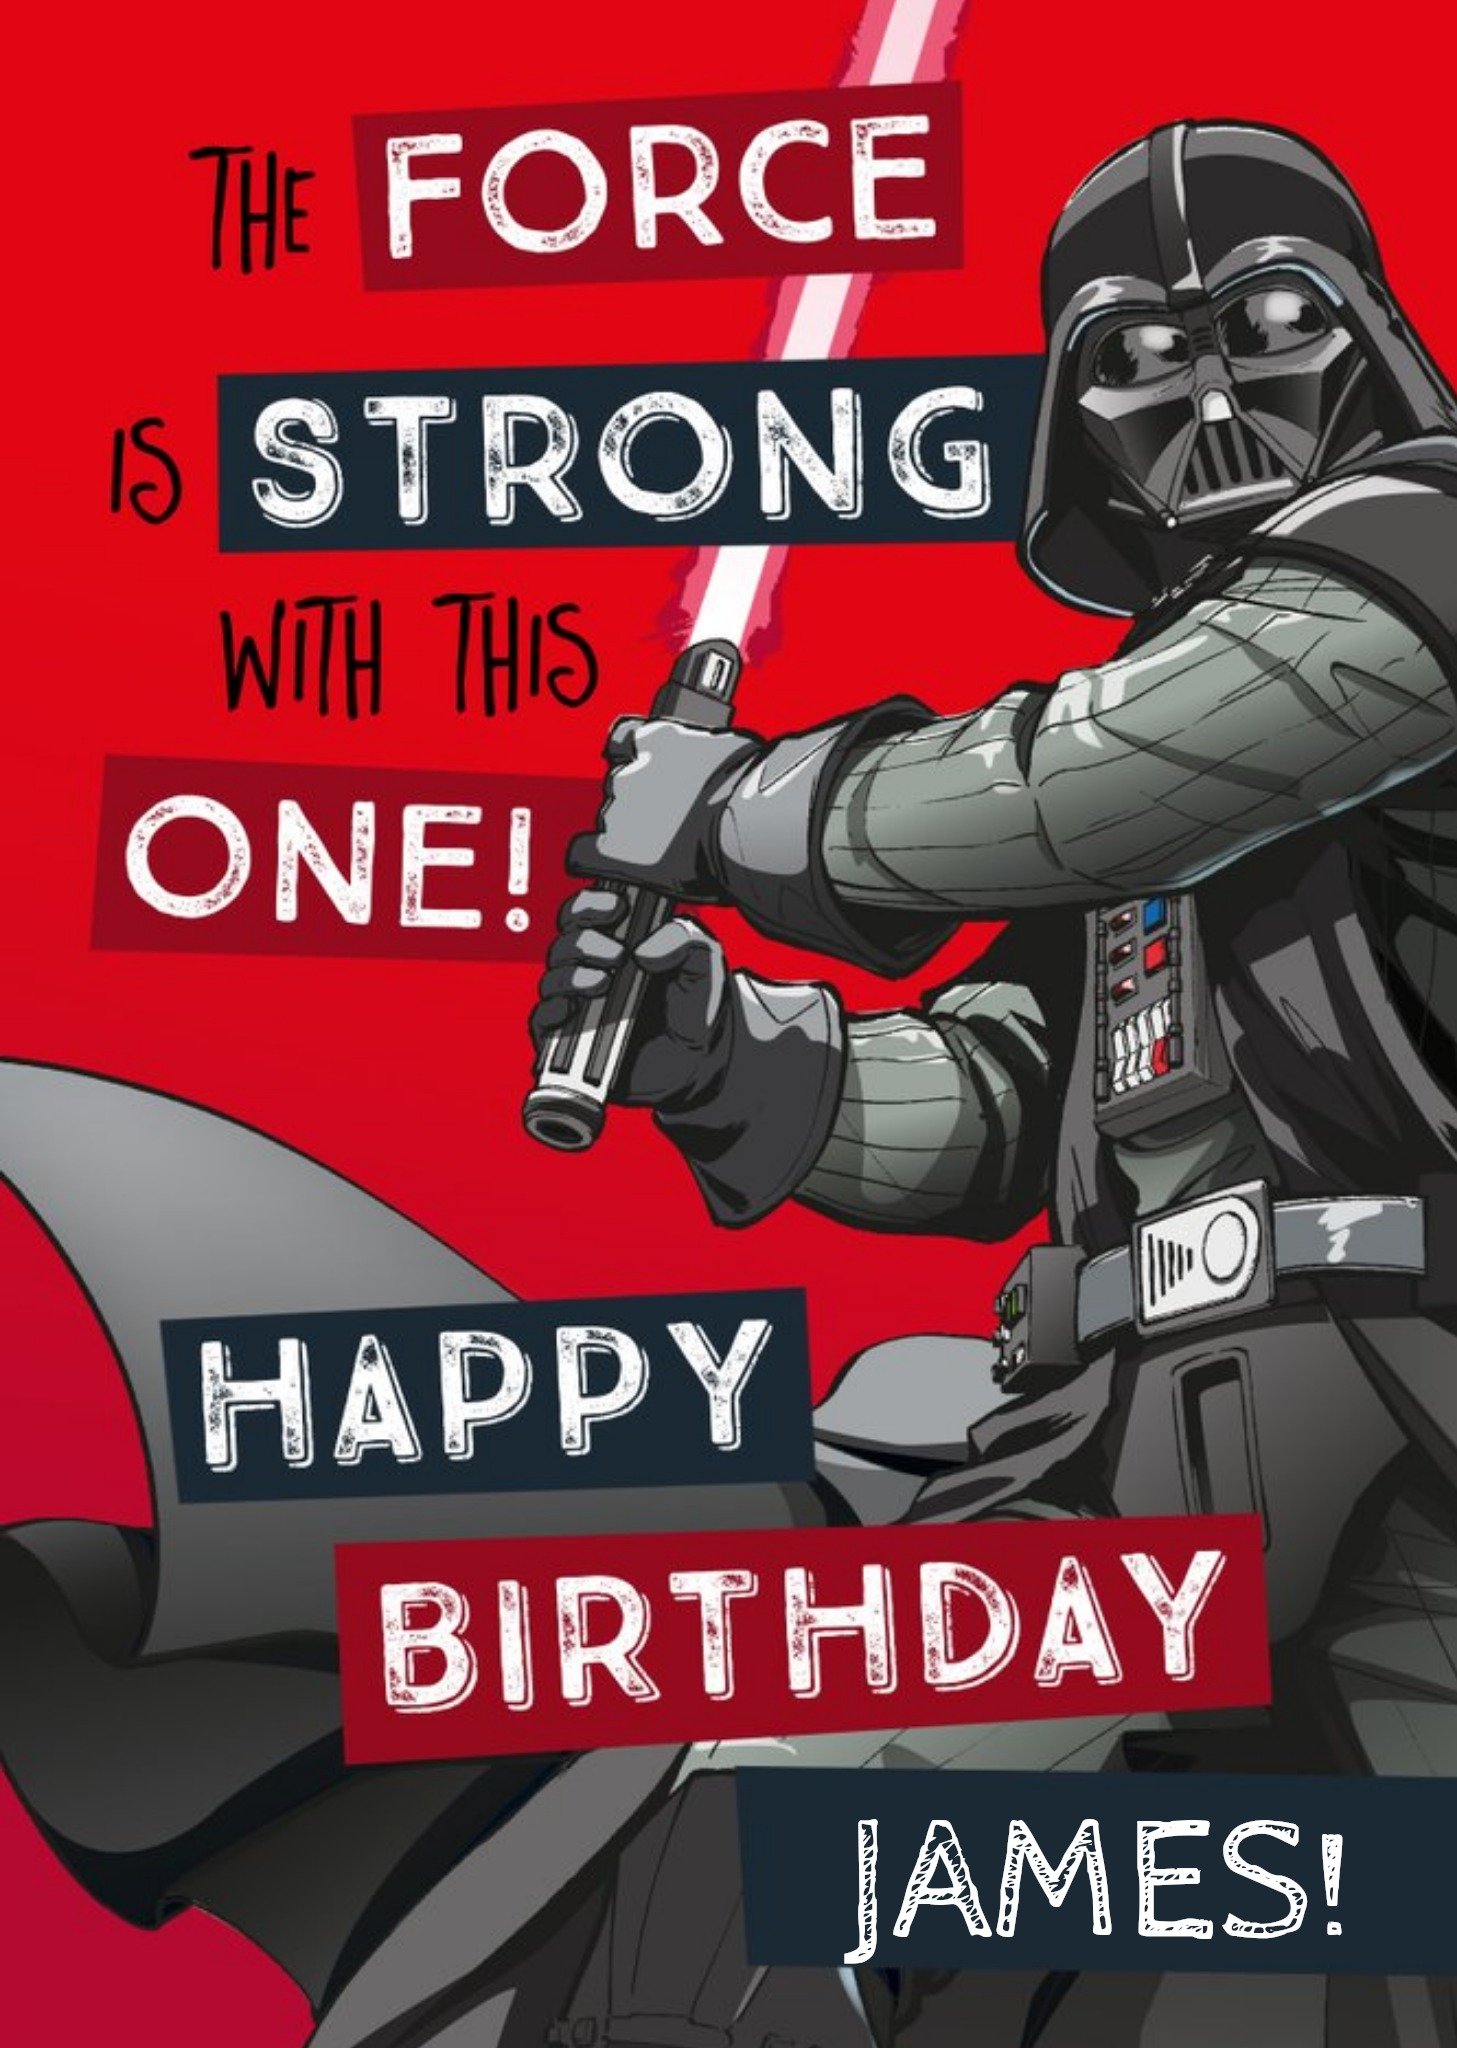 Disney Star Wars Birthday Card - Darth Vader, Large